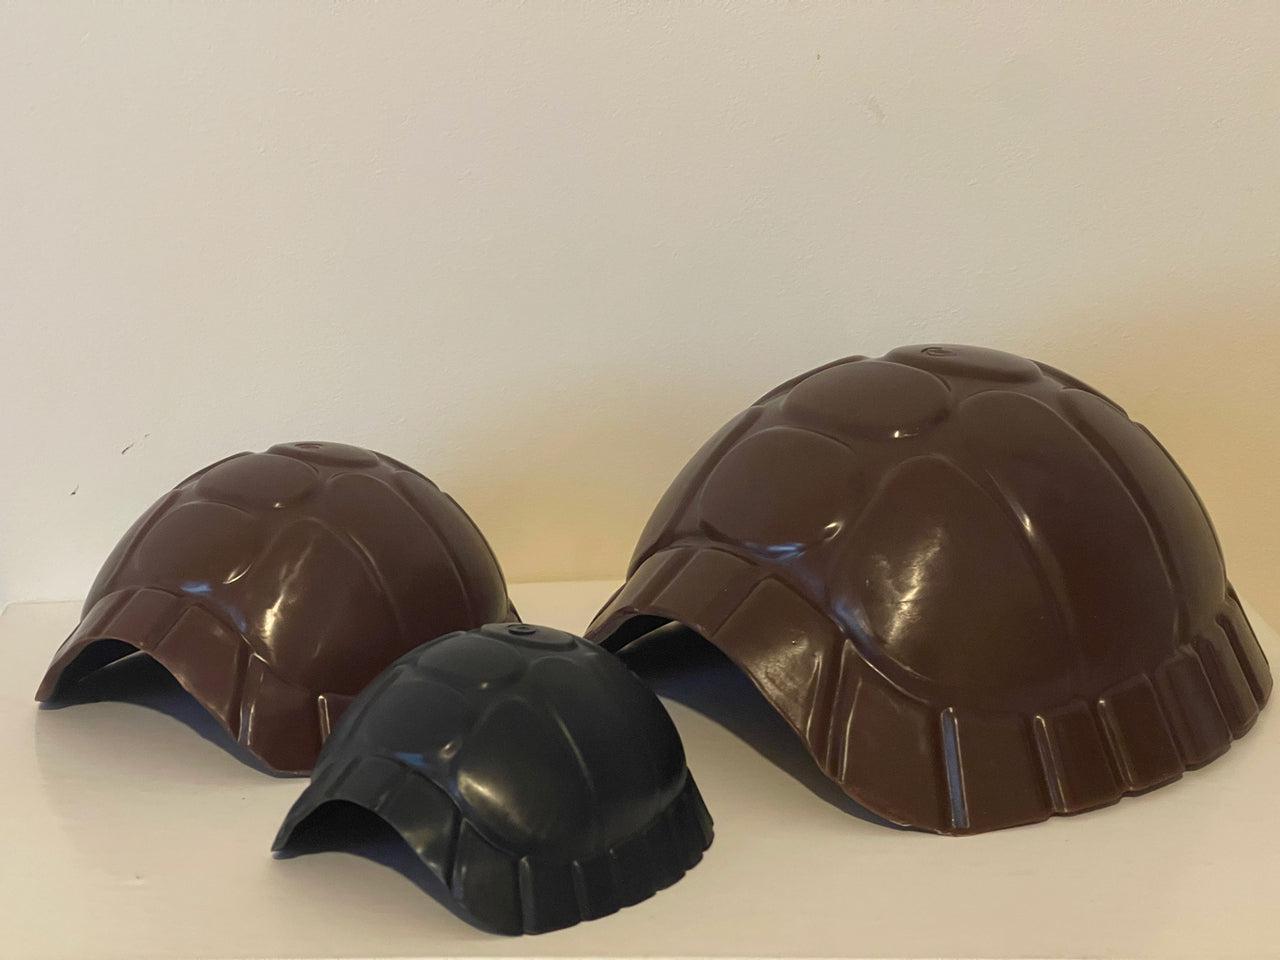 Easy Clean Tortoise Shell Style Hide (Plastic)